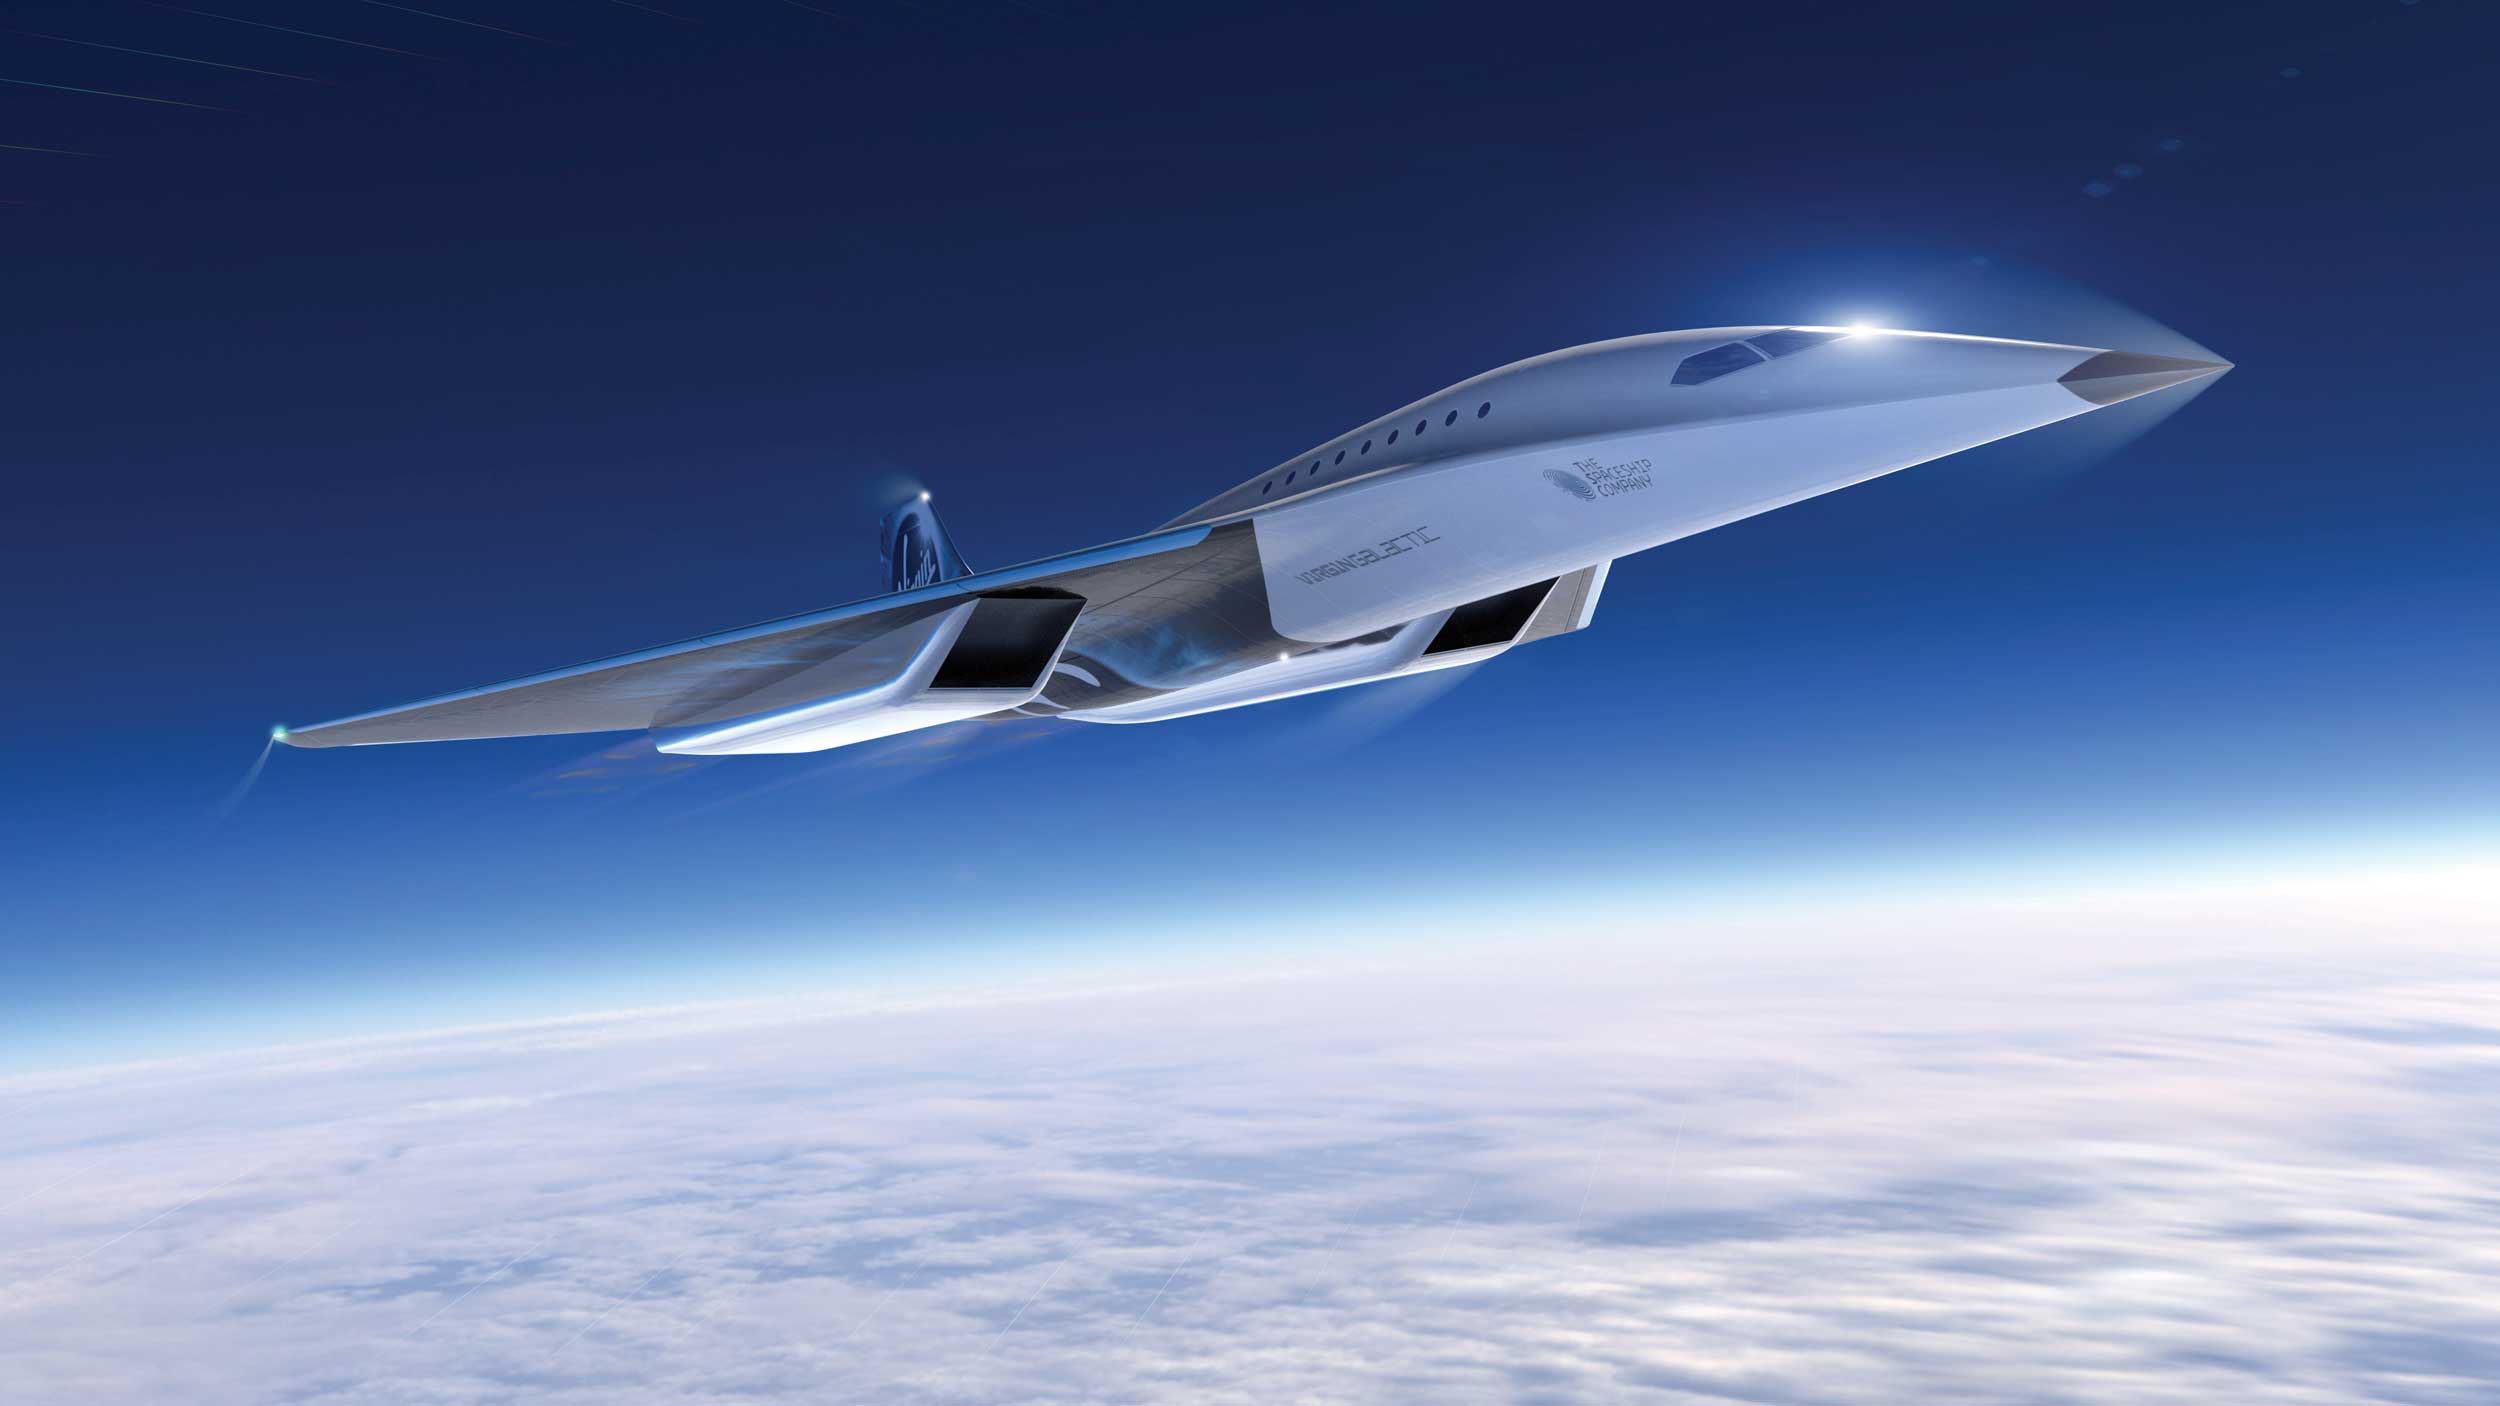 Viorgin Galactic supersonic airliner